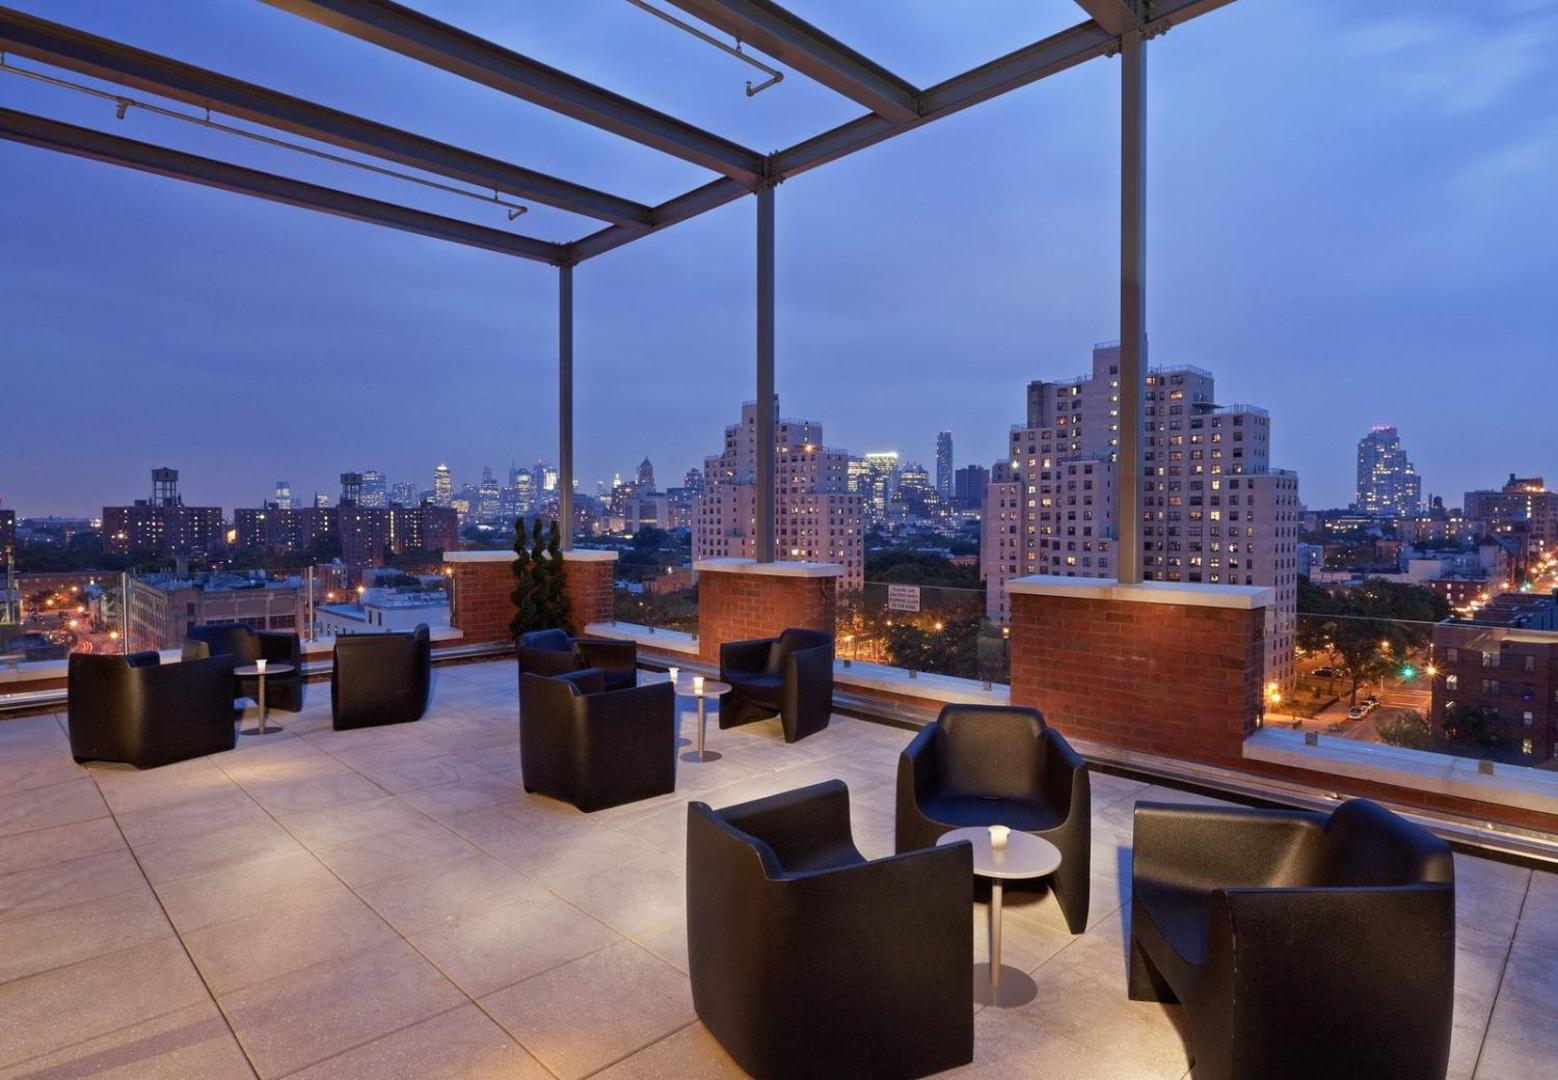 Fairfield Inn & Suites by Marriott Brooklyn